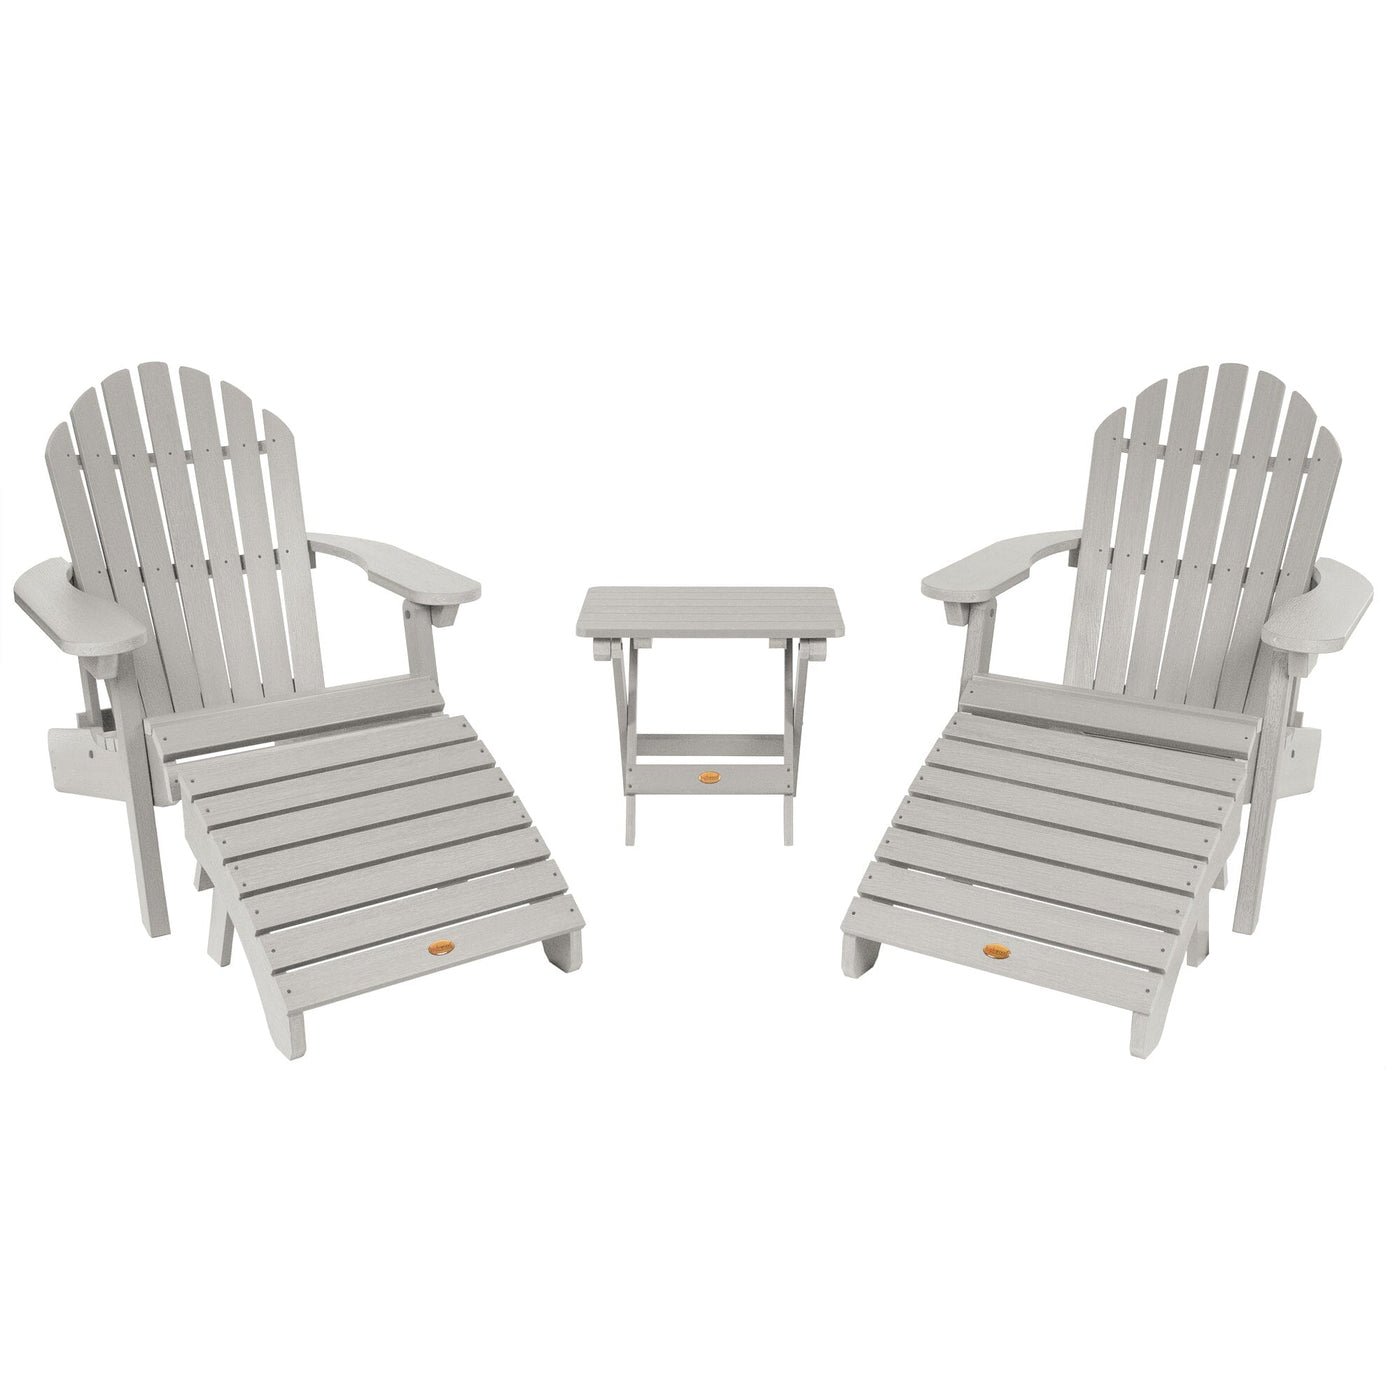 2 Hamilton Folding & Reclining Adirondack Chairs, 2 Ottomans & 1 Folding Side Table Kitted Sets Highwood USA Harbor Gray 